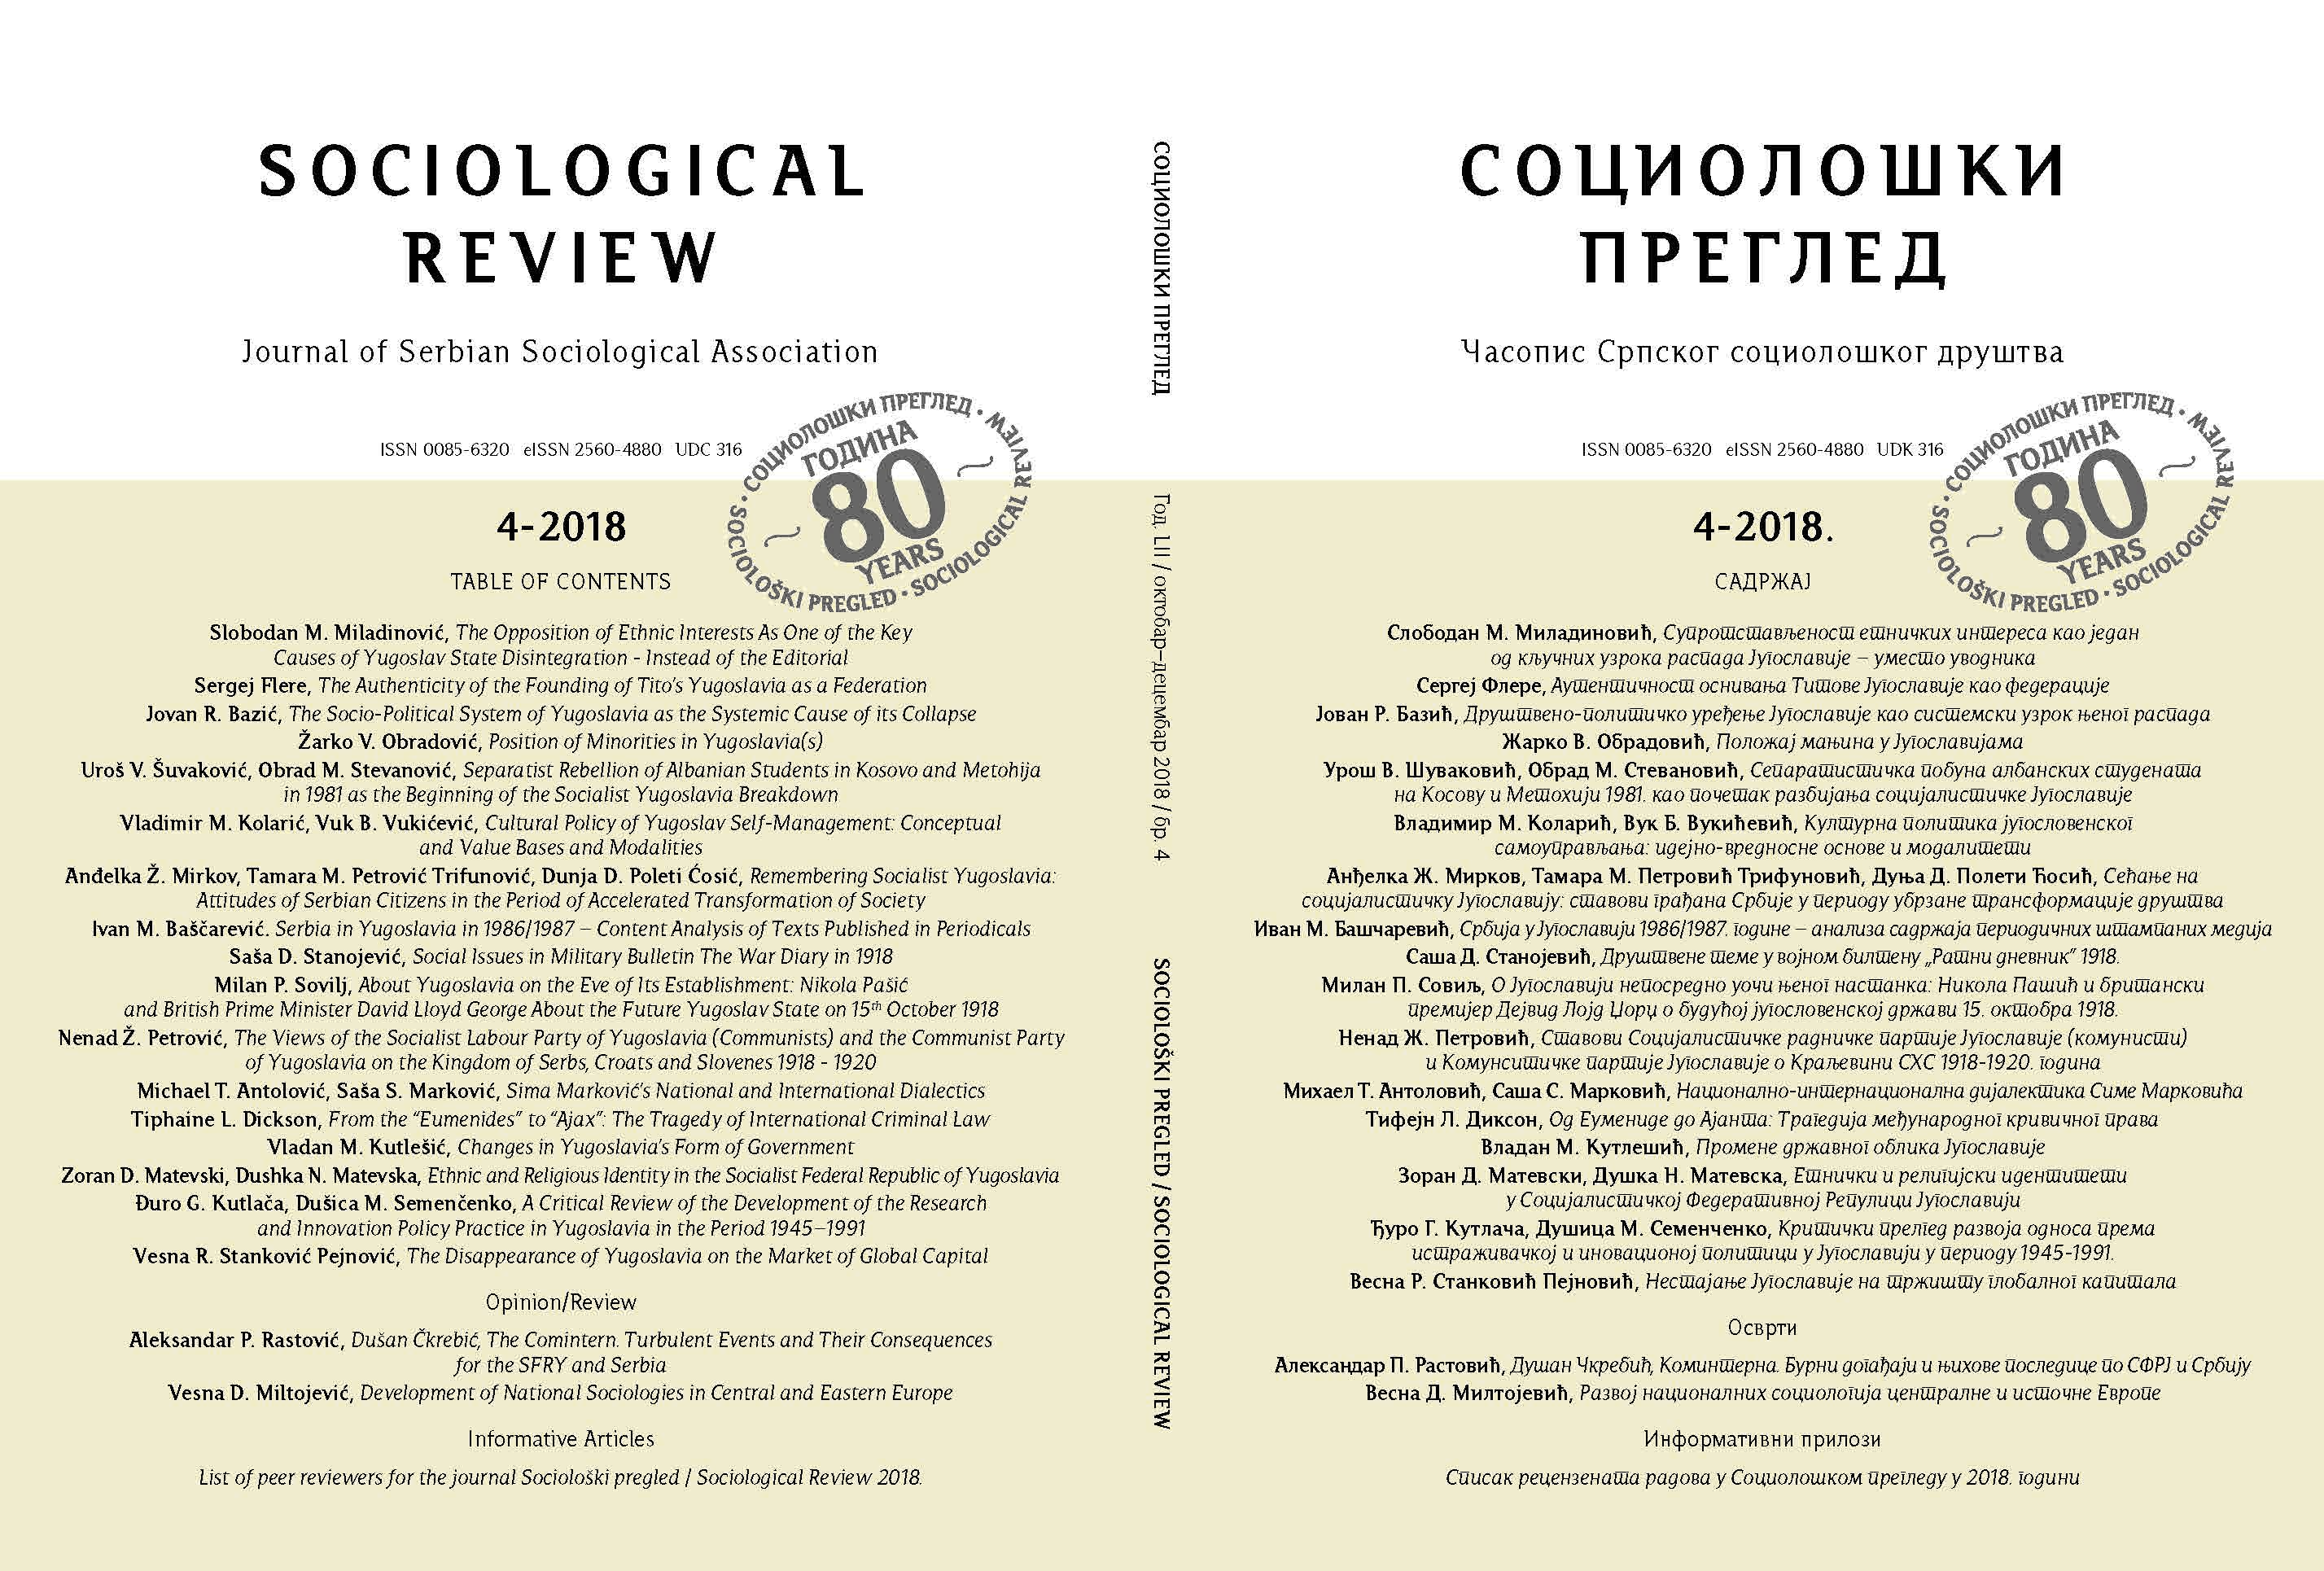 Sima Marković’s National and International Dialectics Cover Image